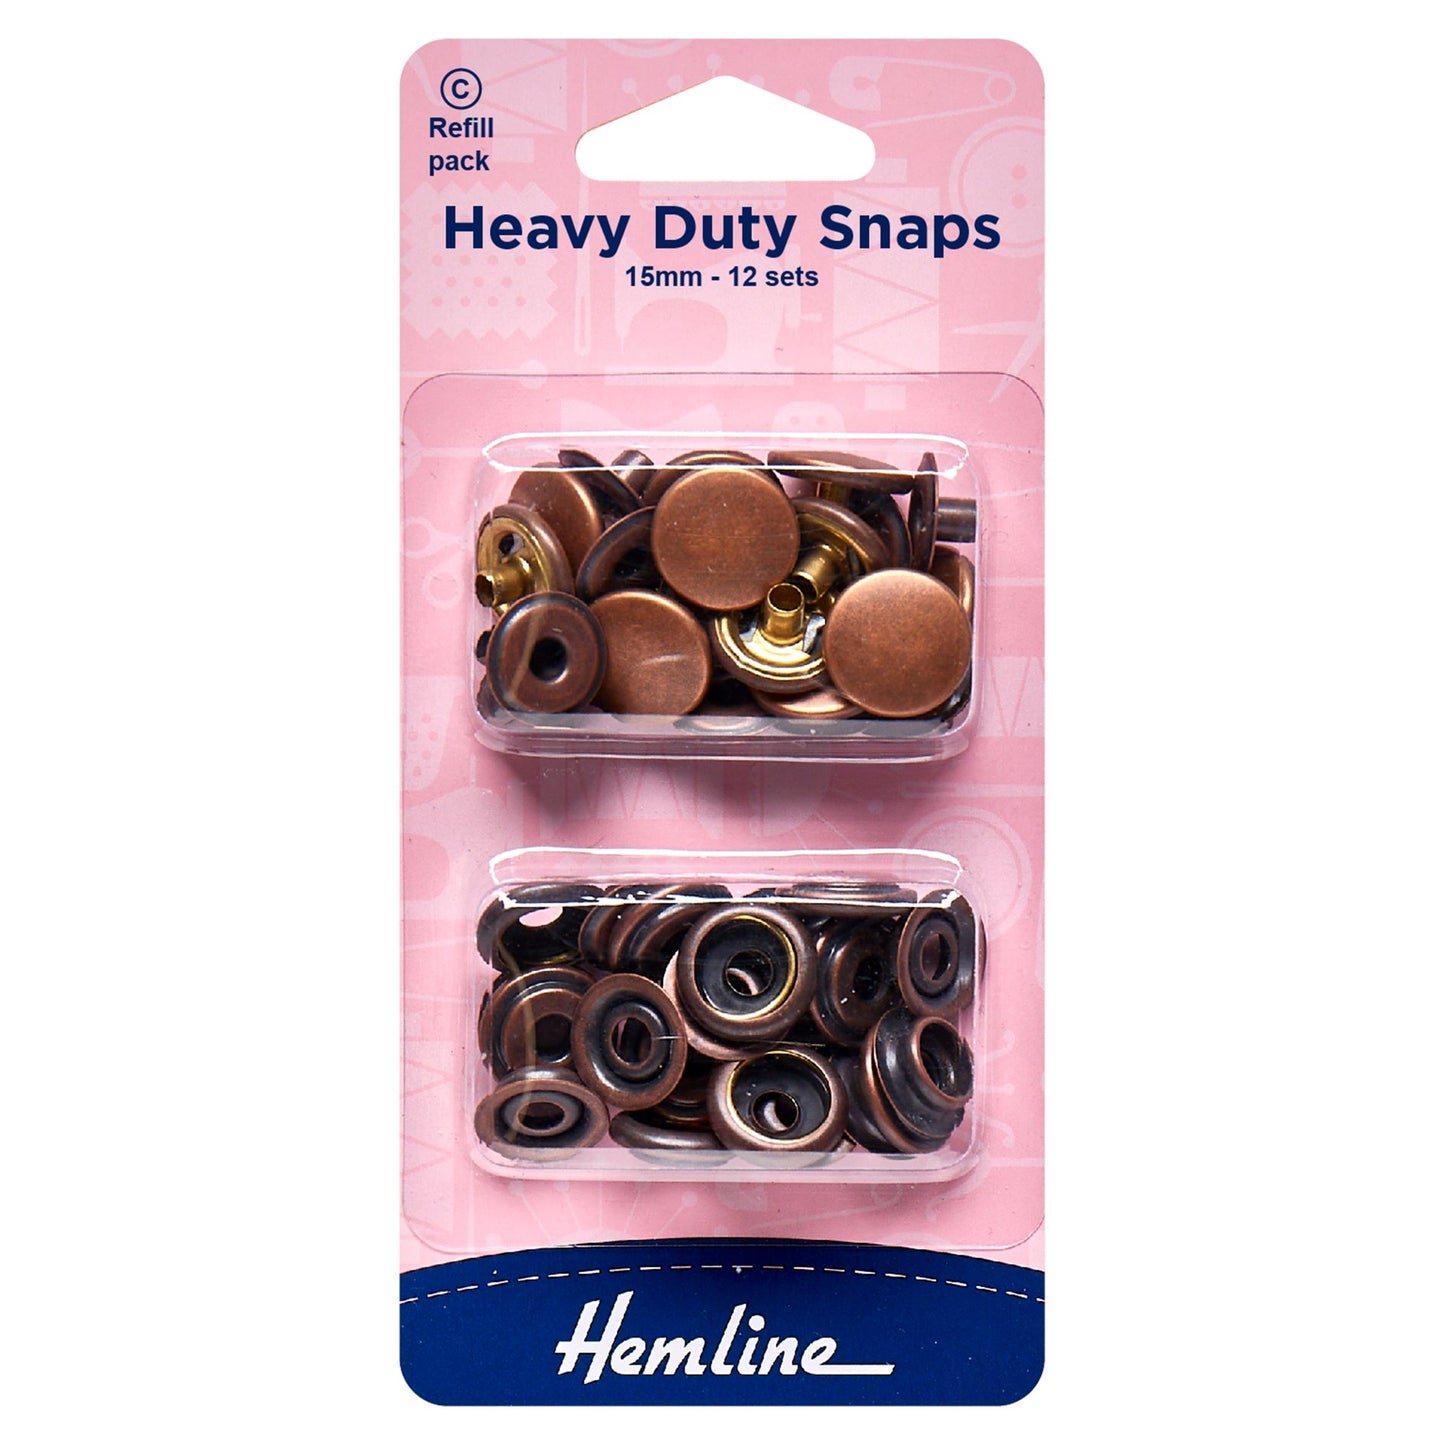 Heavy Duty Snaps 15mm Refill